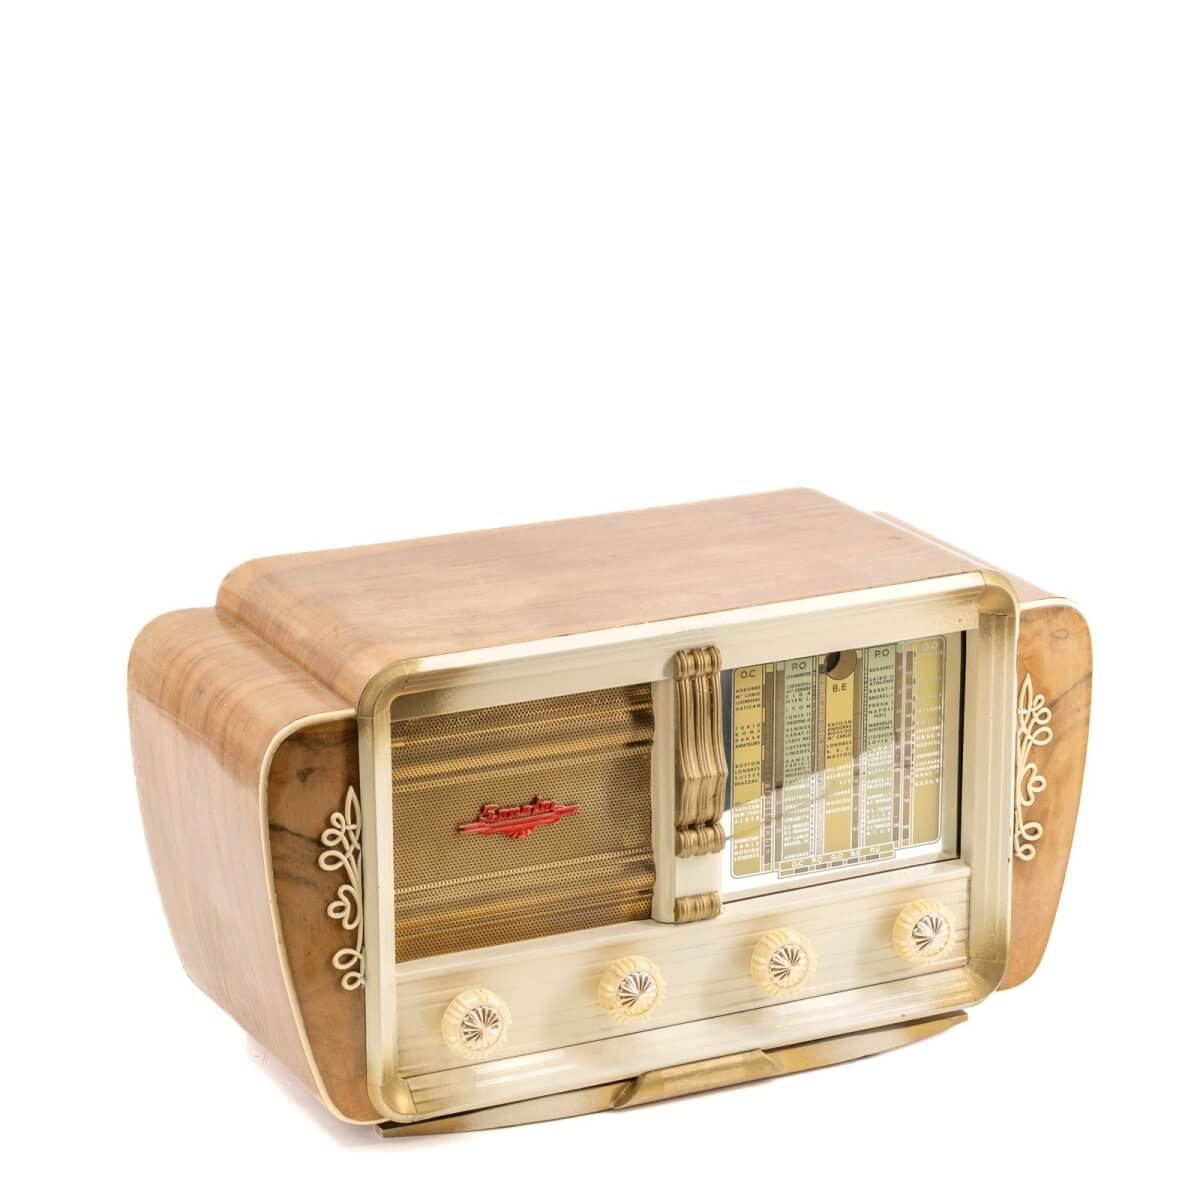 Radio Bluetooth Sonolor Vintage 50’S-A.bsolument-enceintes-et-radios-vintage-bluetooth